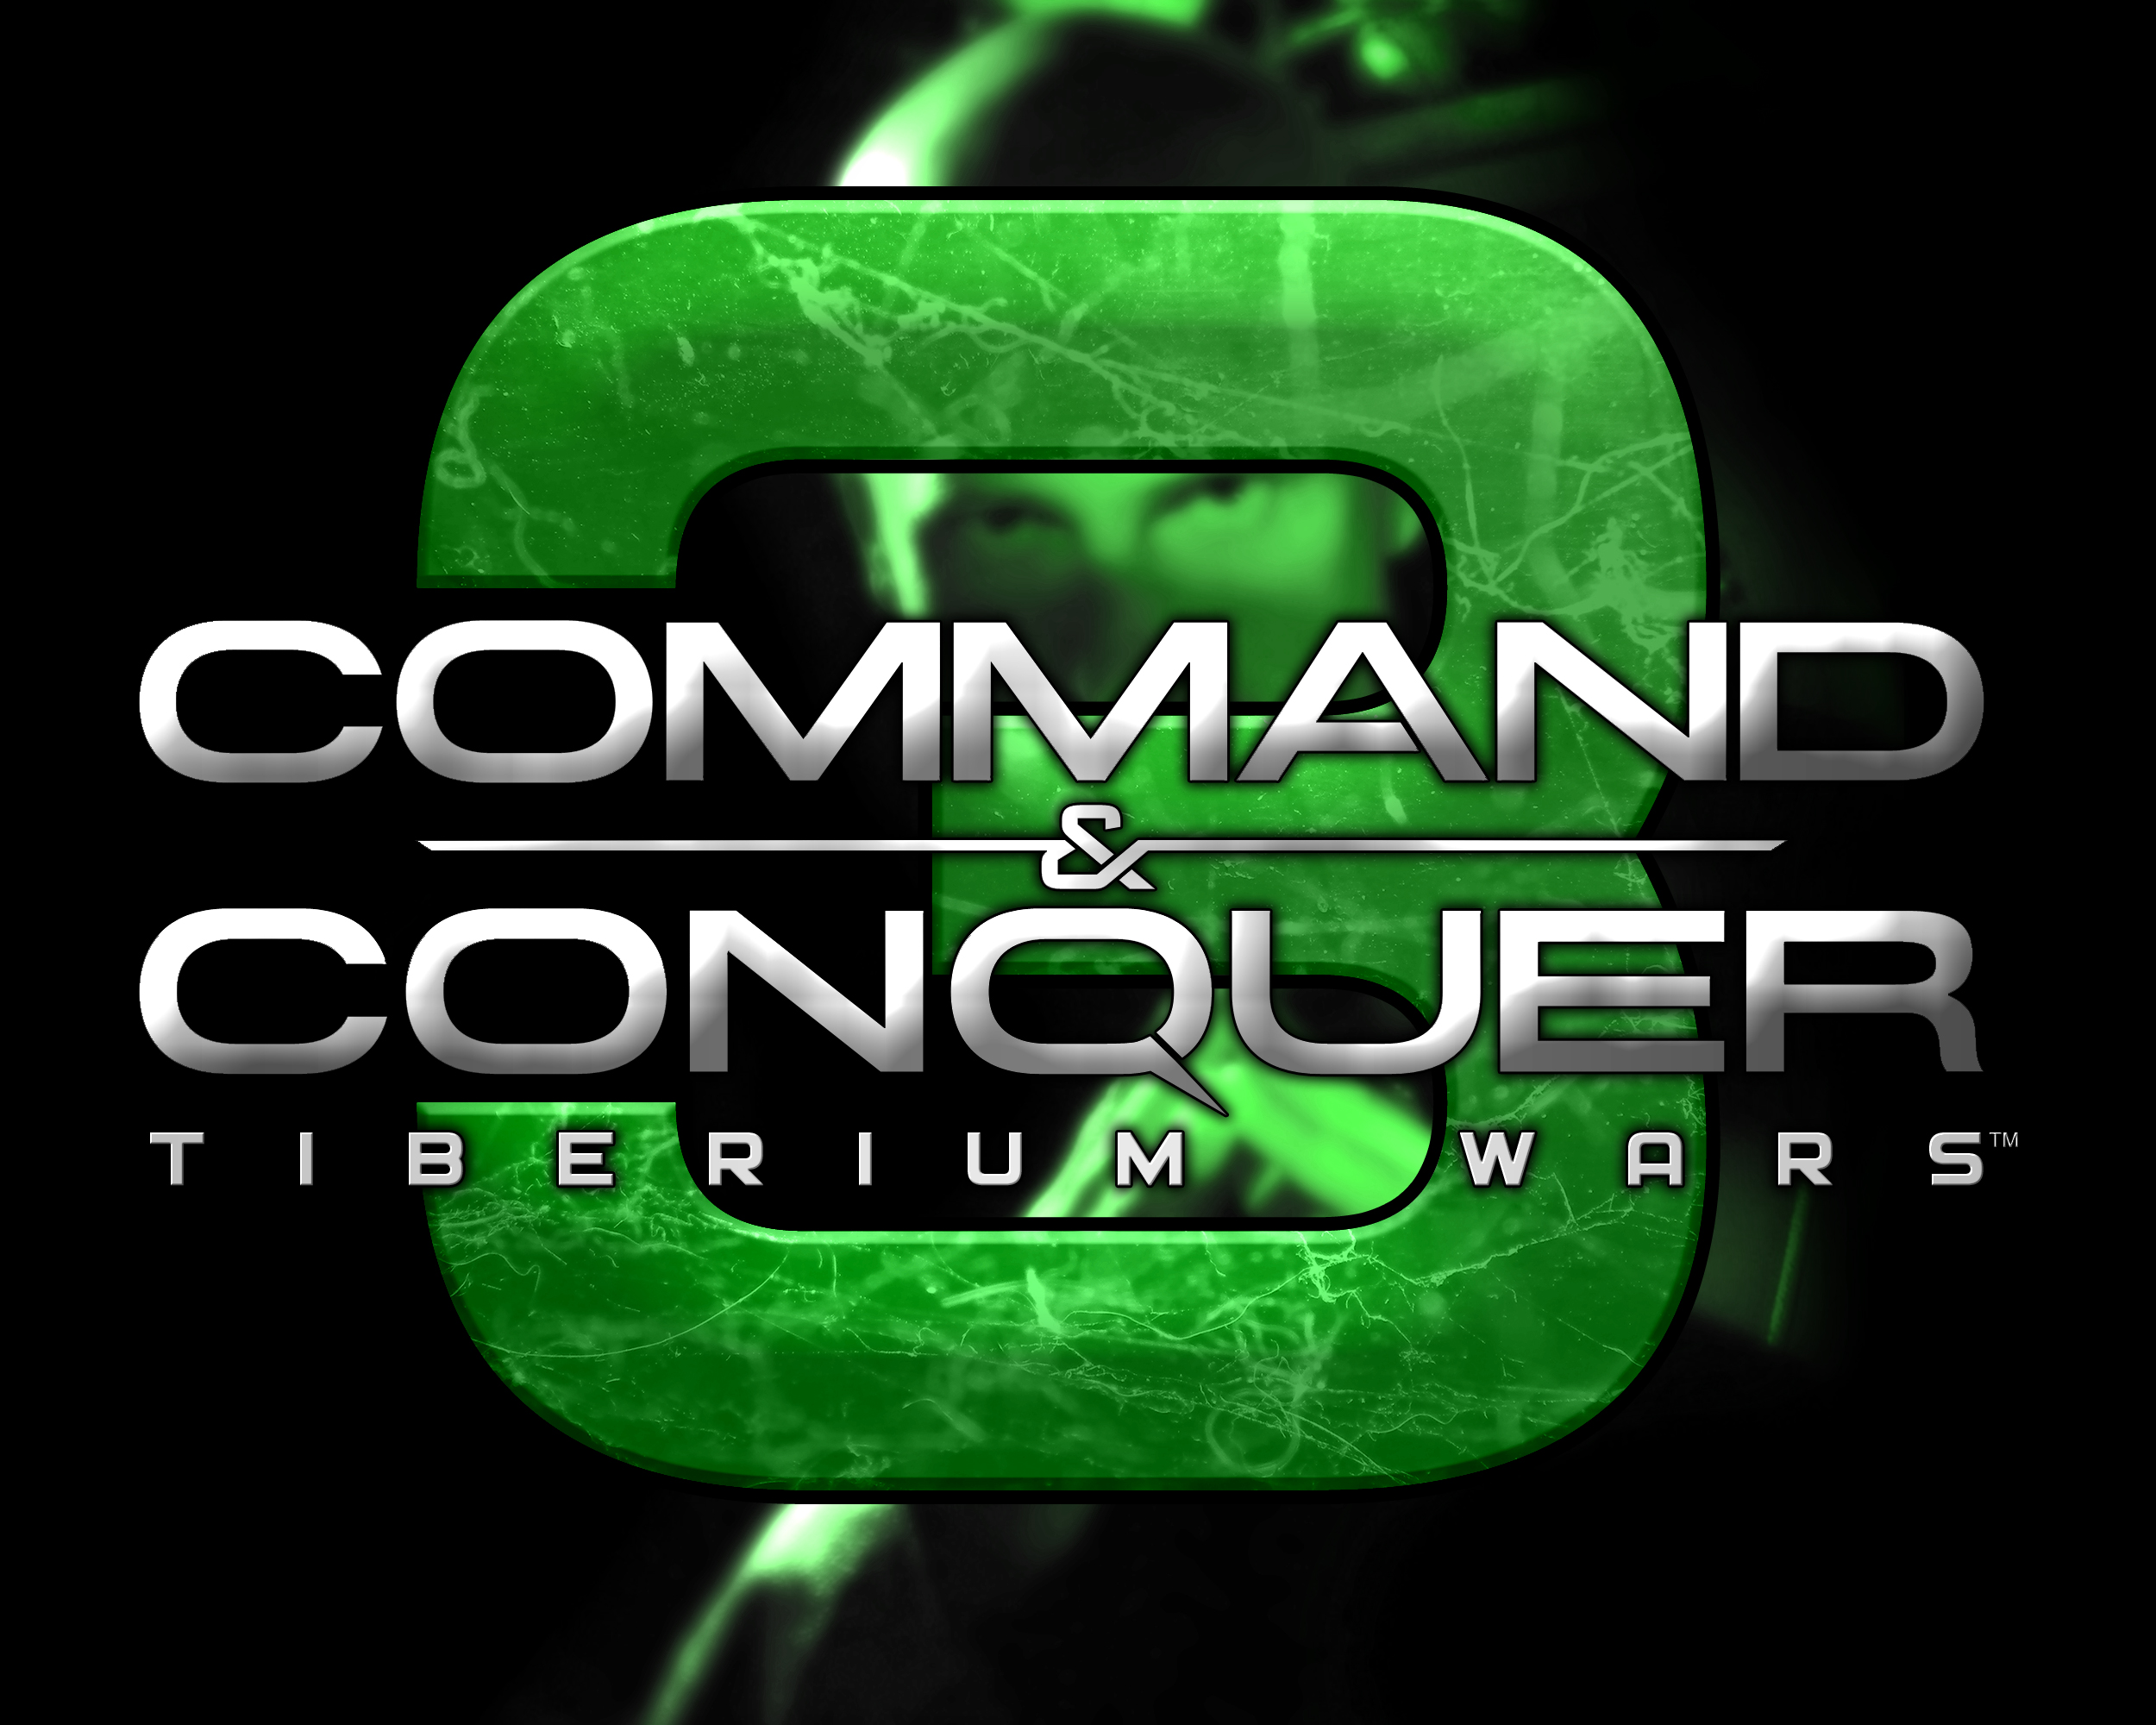 Command And Conquer 3 Tiberium Wars | НОД | Турнир Пыльная буря